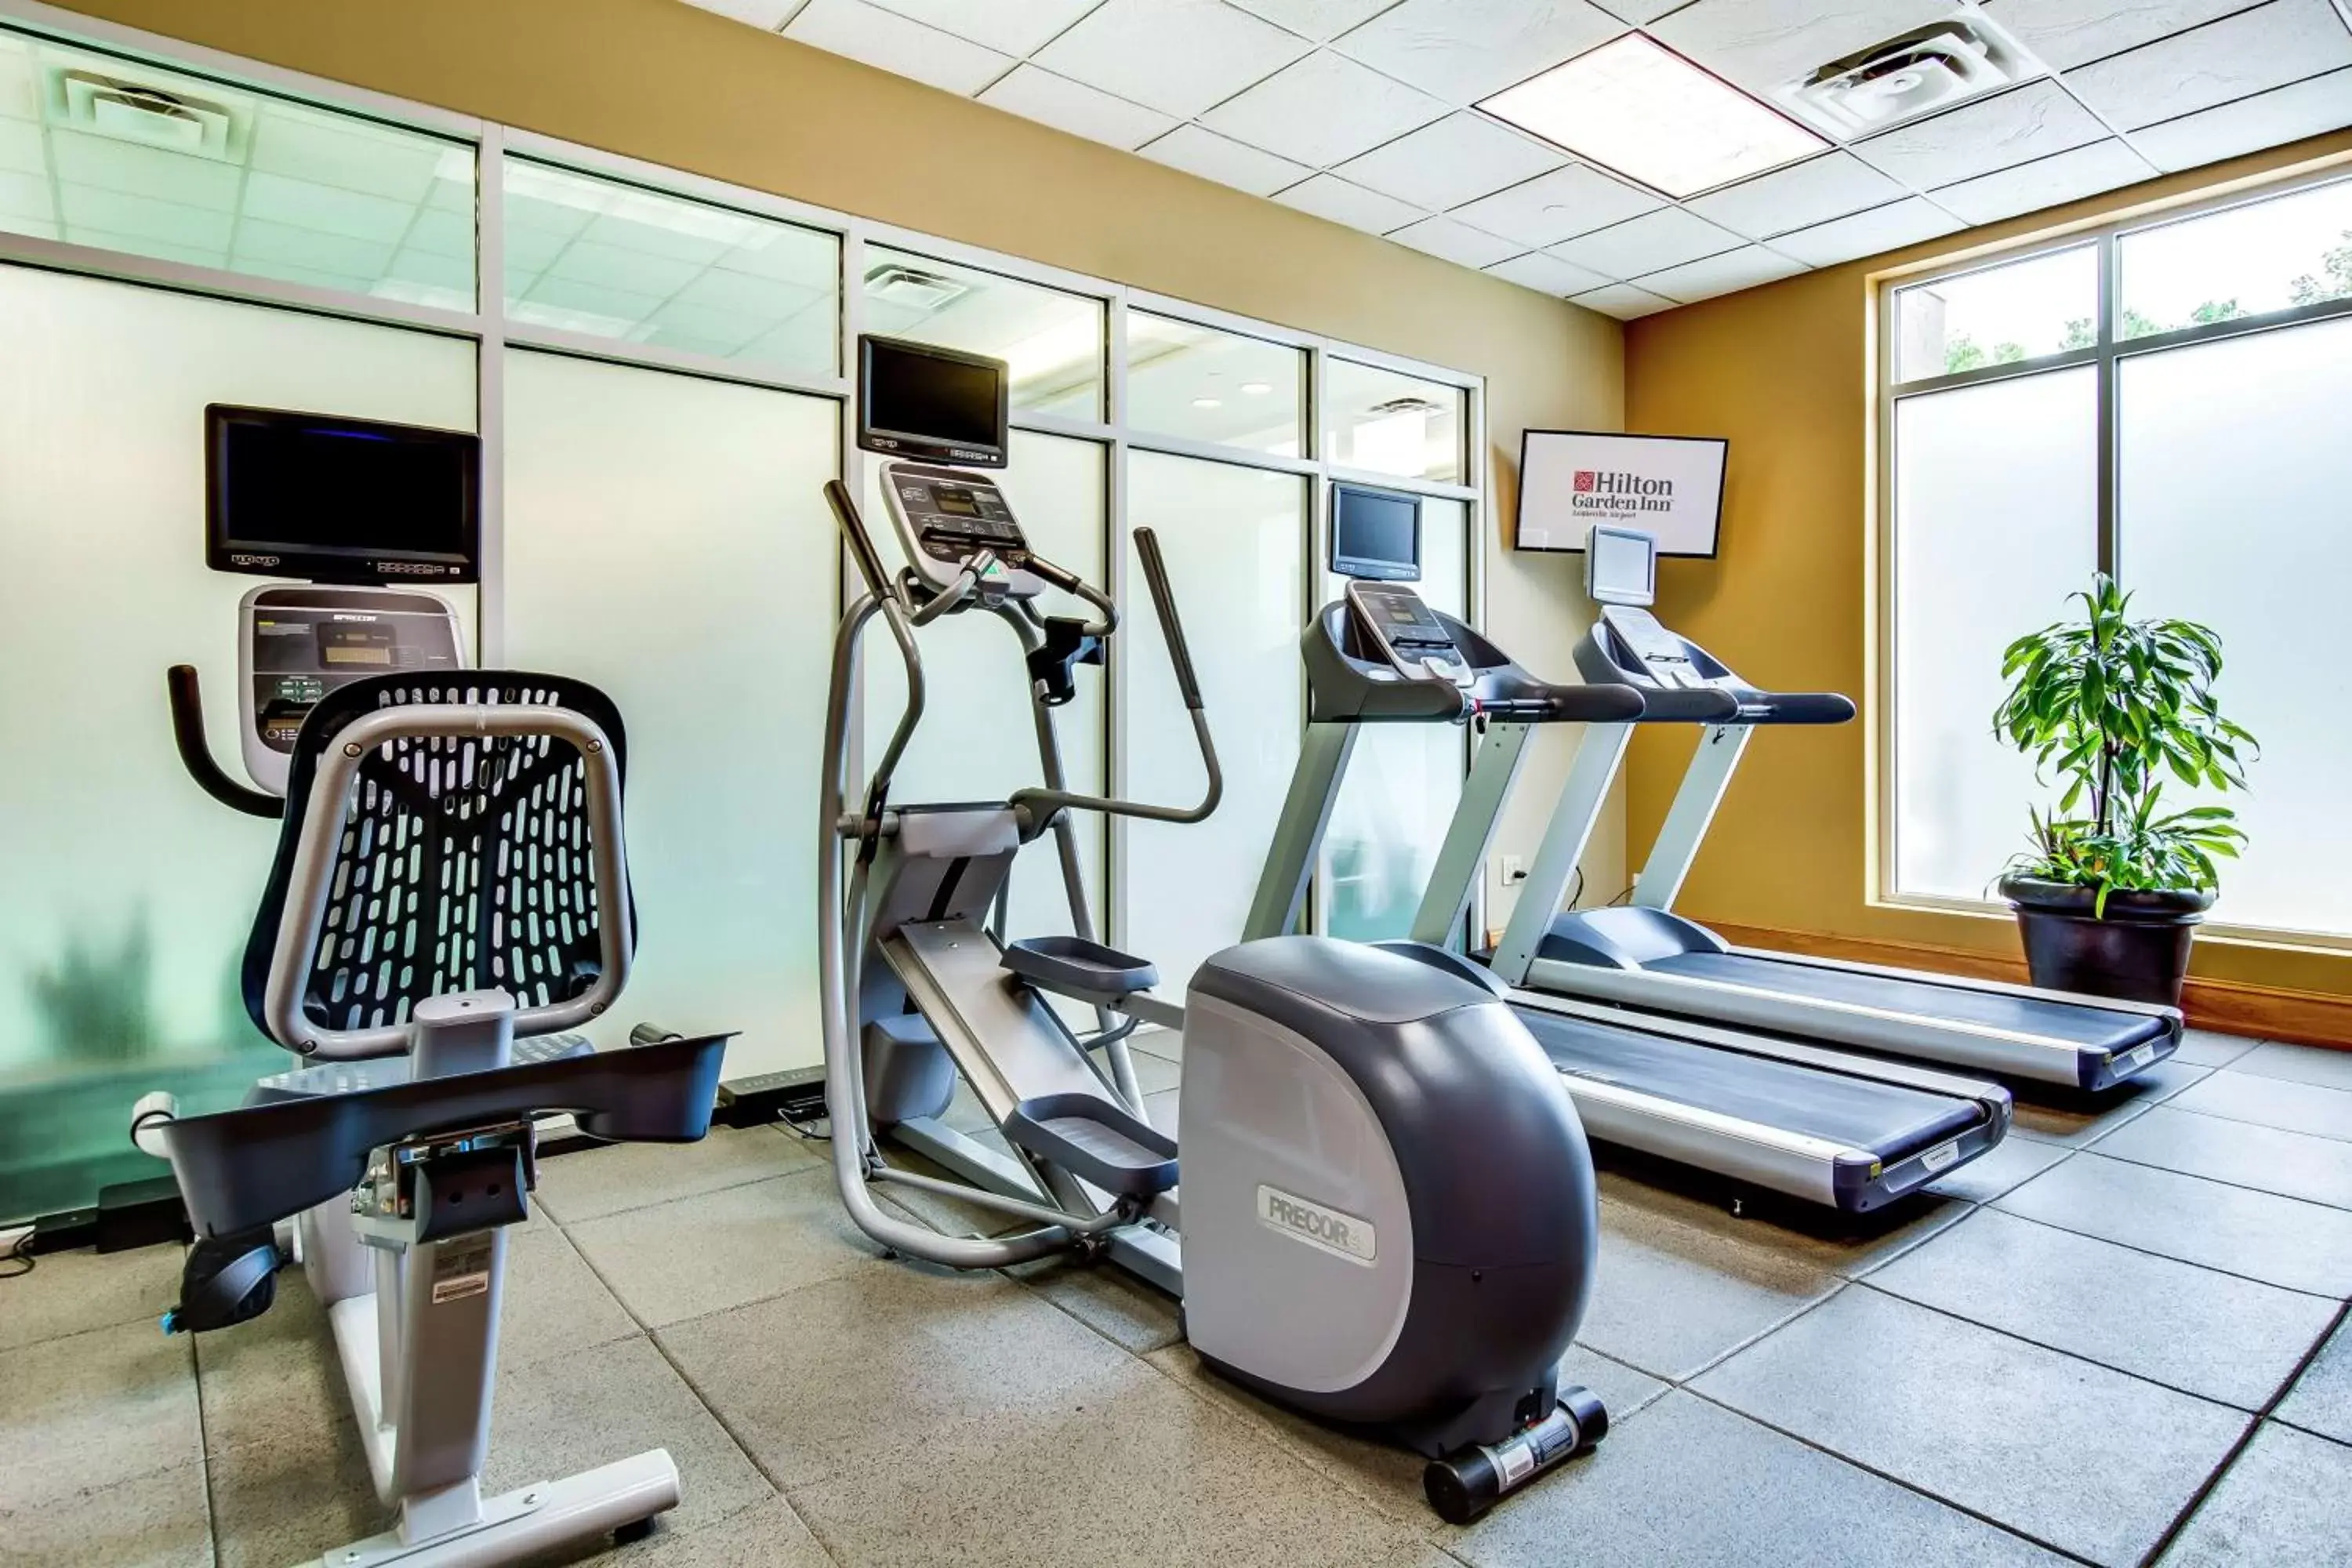 Fitness centre/facilities, Fitness Center/Facilities in Hilton Garden Inn Louisville Airport